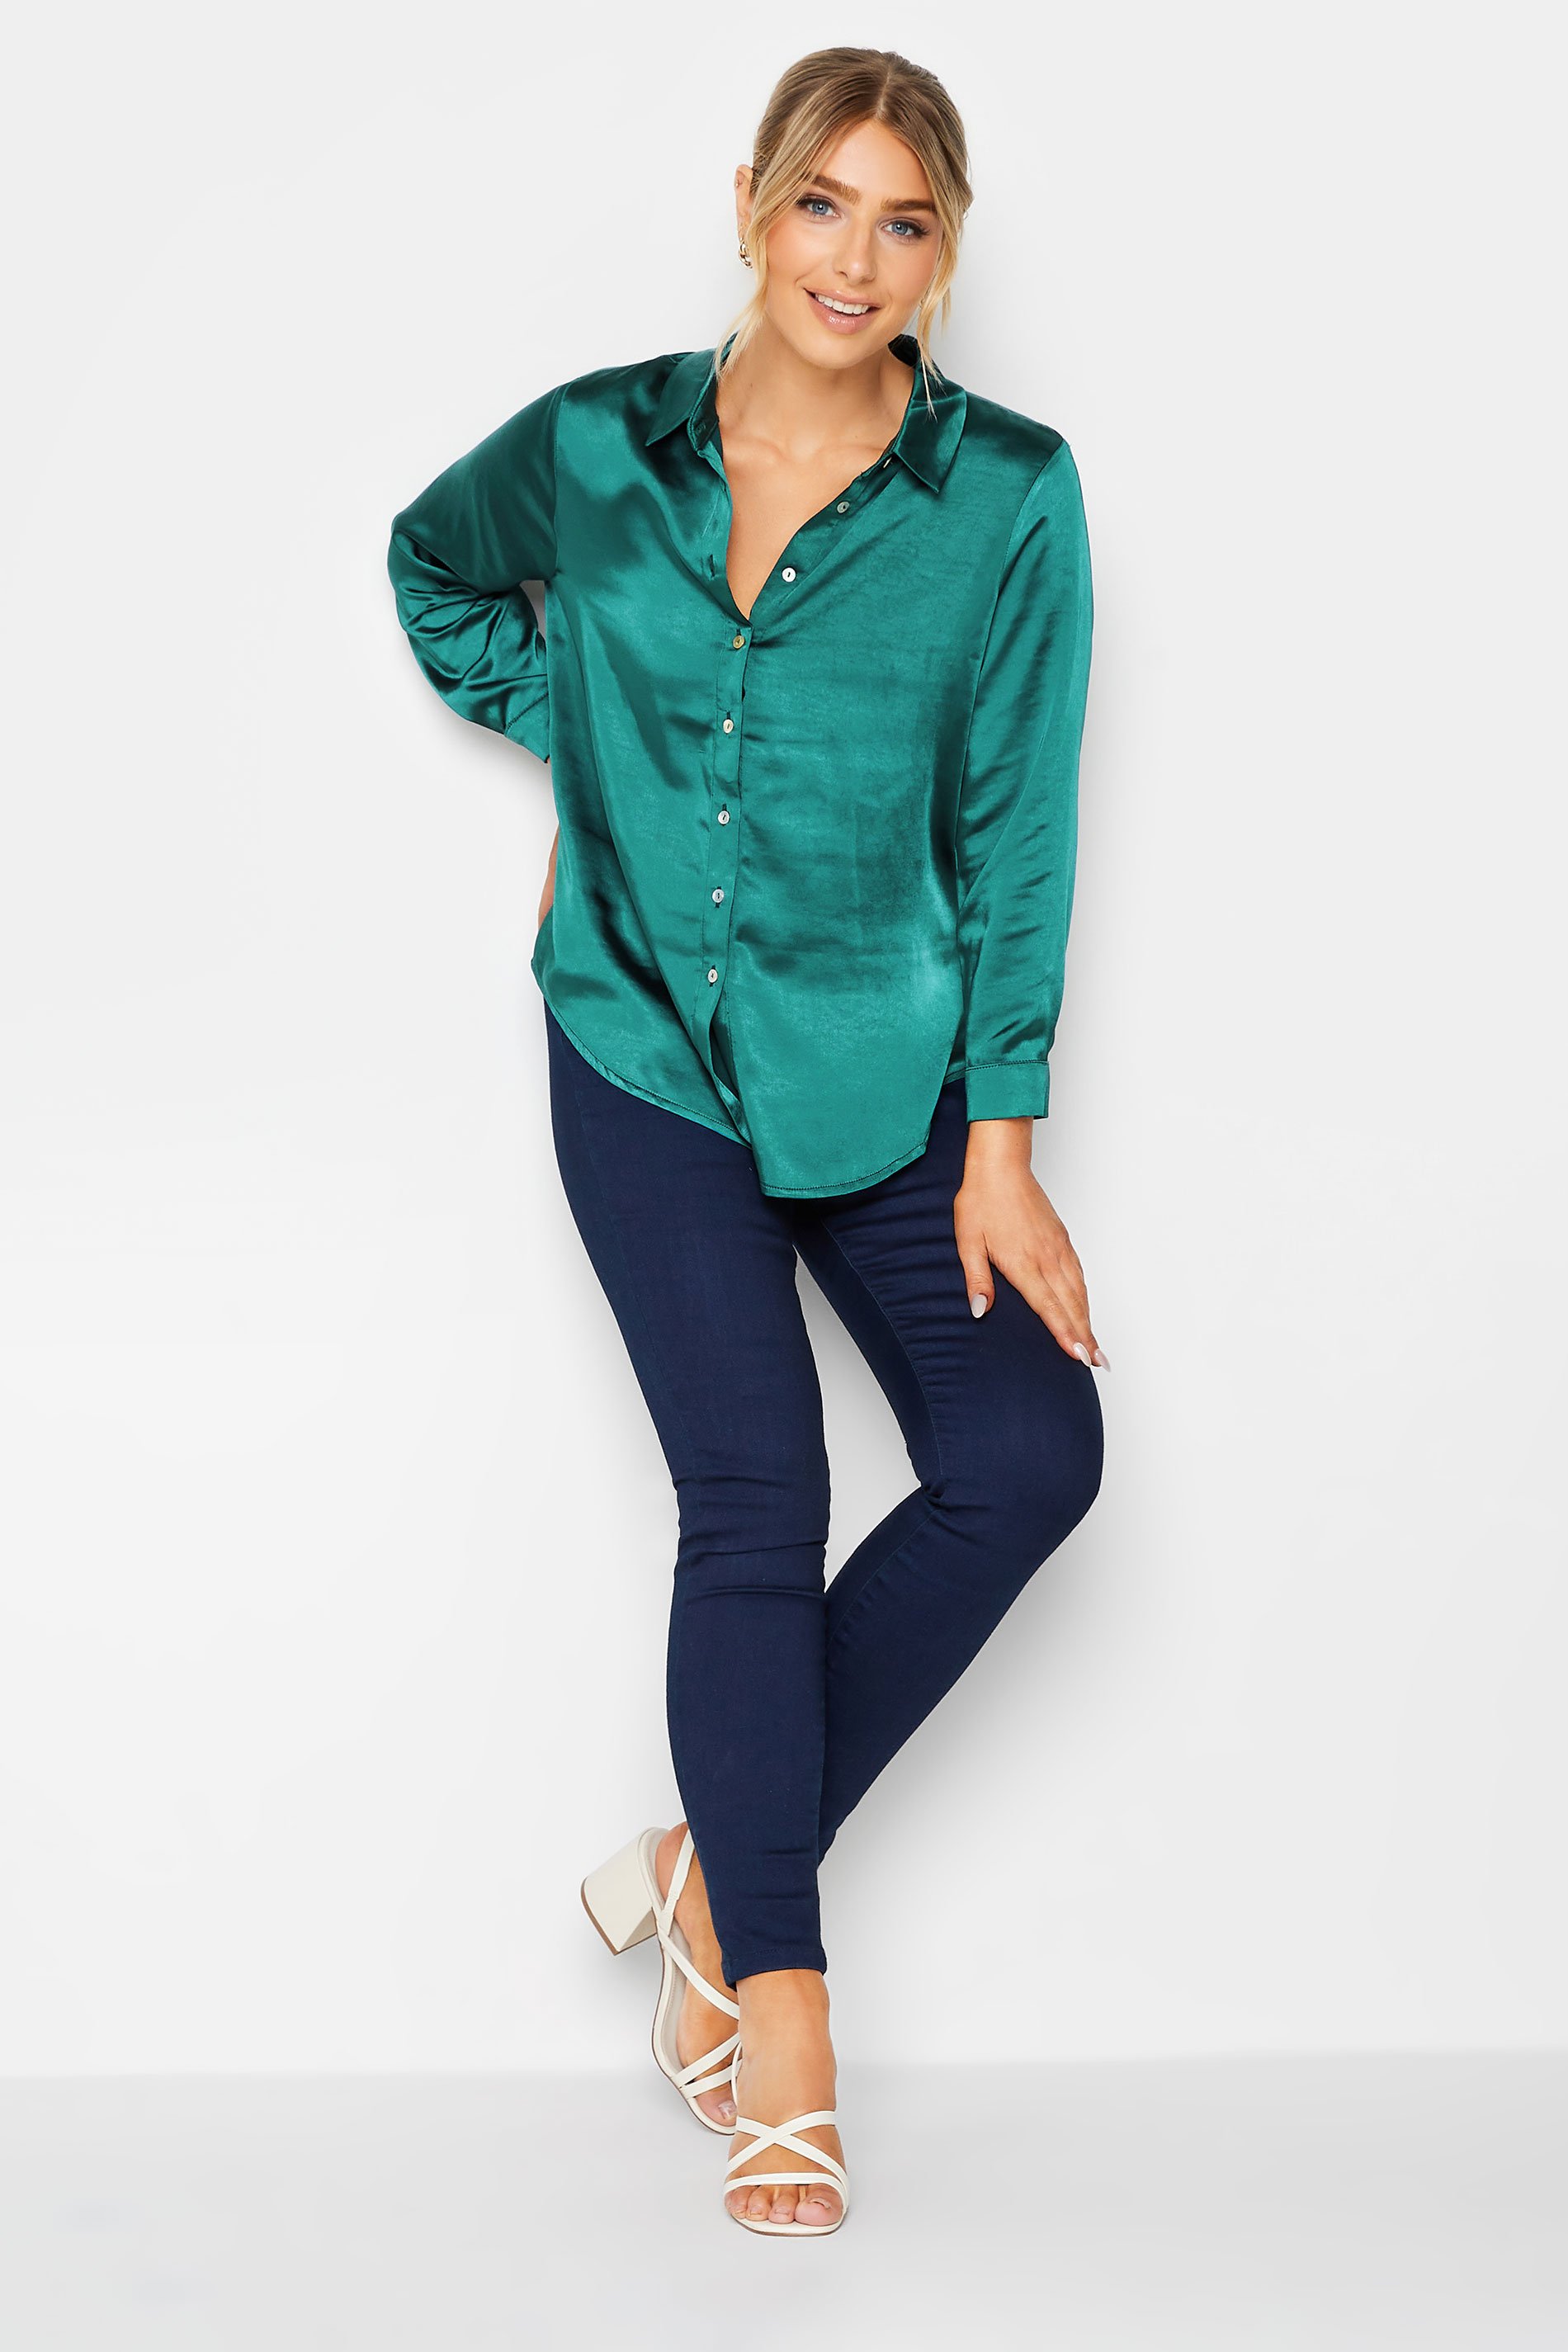 M&Co Emerald Green Satin Shirt | M&Co 2